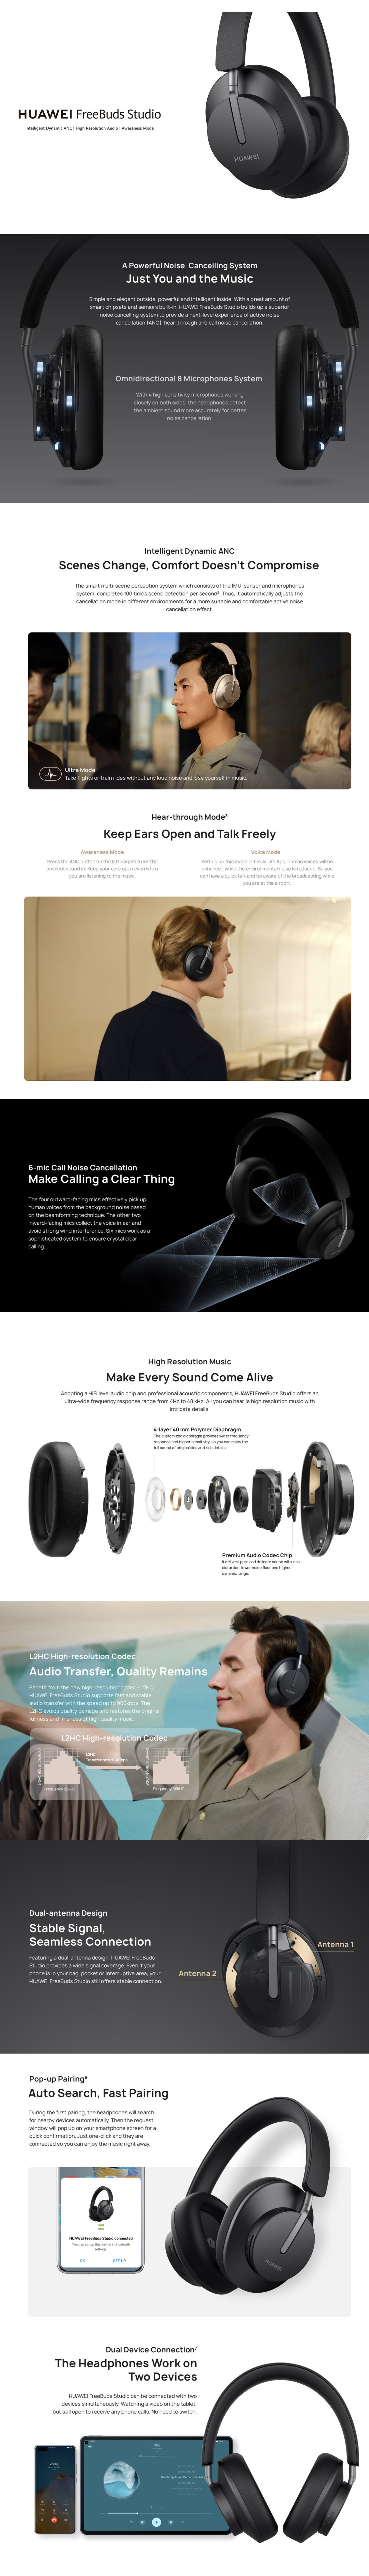 Huawei-FreeBuds-Studio-Wireless-Noise-Cancellation-Headphone-Description